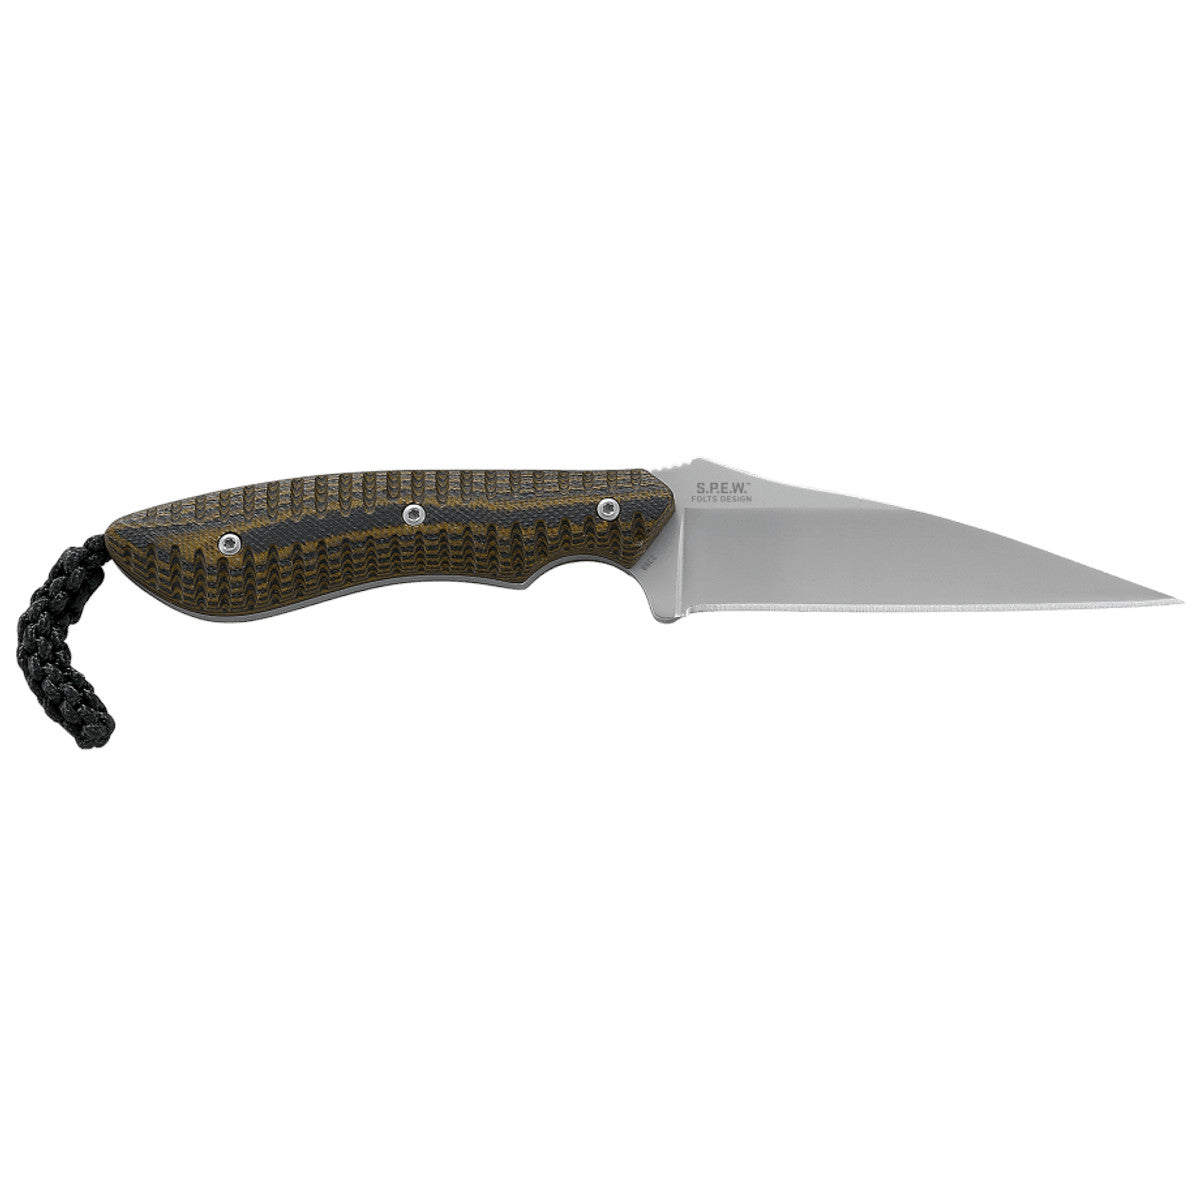 CRKT S.P.E.W. 3" Wharncliffe G10 Fixed Blade Knife - Alan Folts Design 2388